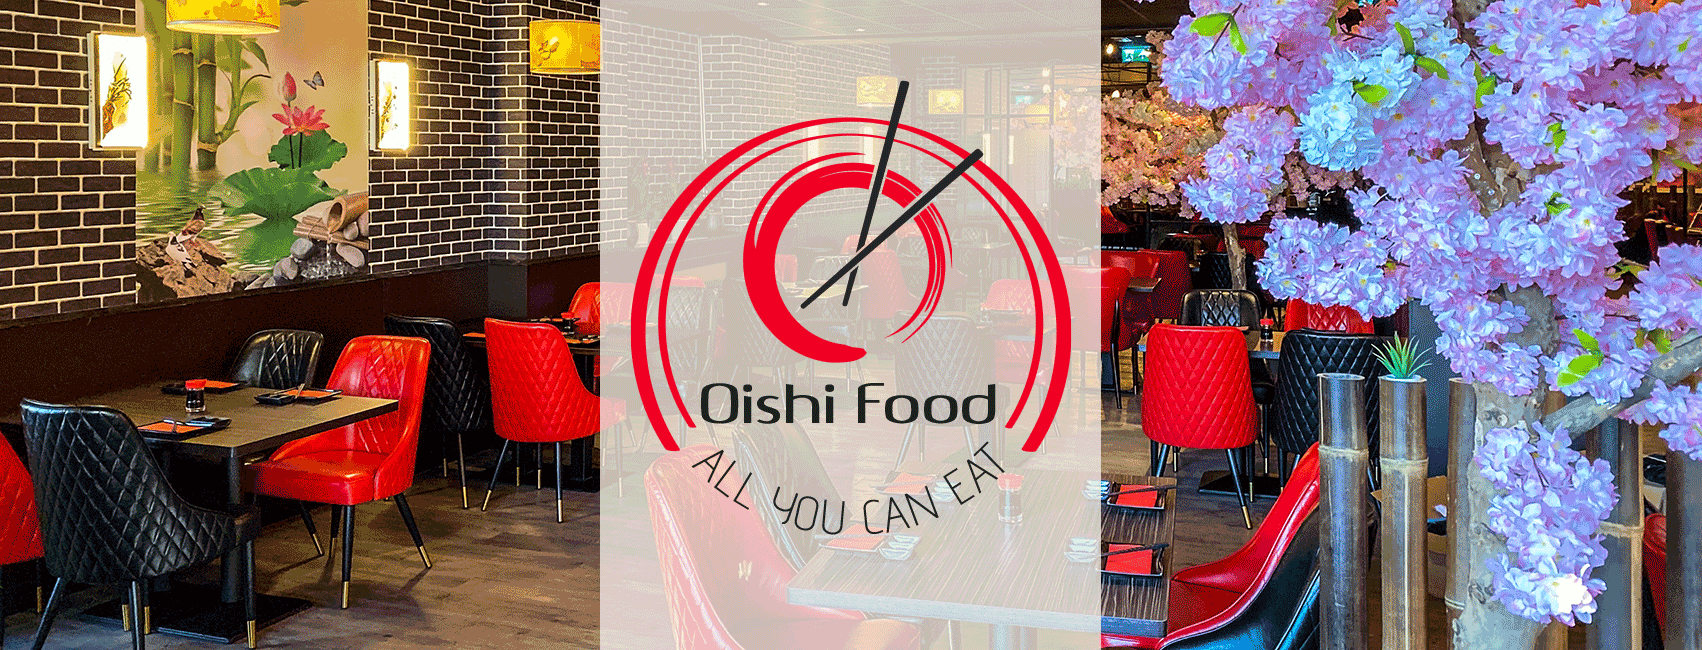 €5 KORTING IN MAART - Oishi Food Sushi & Oosterhout